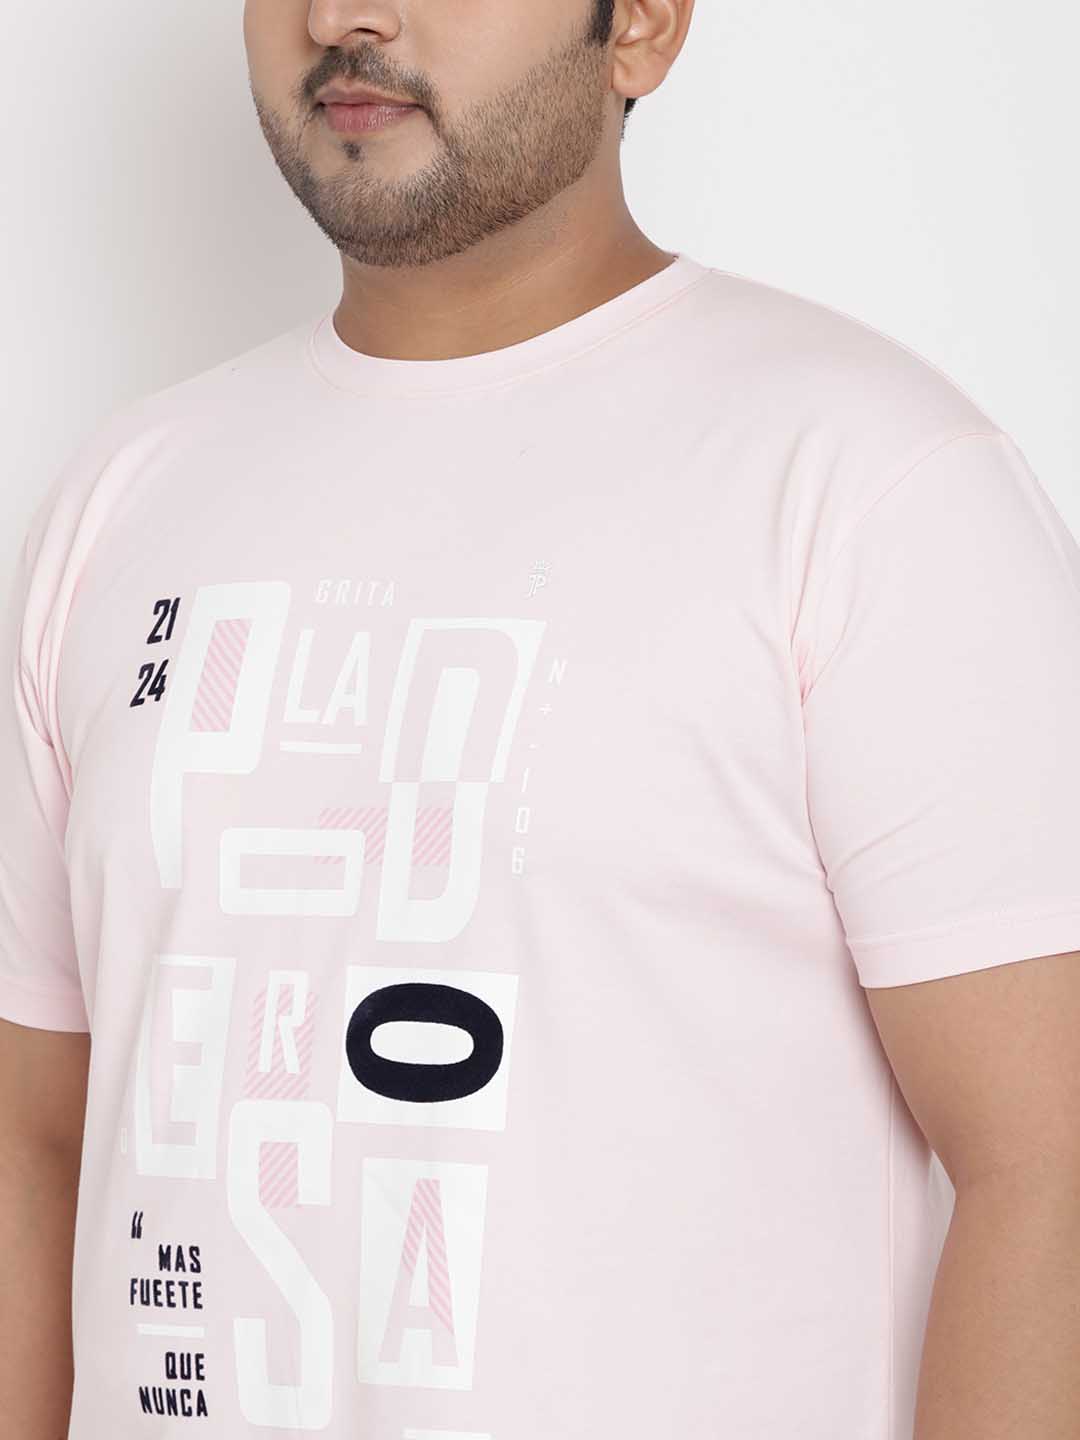 John Pride Pink T-Shirt